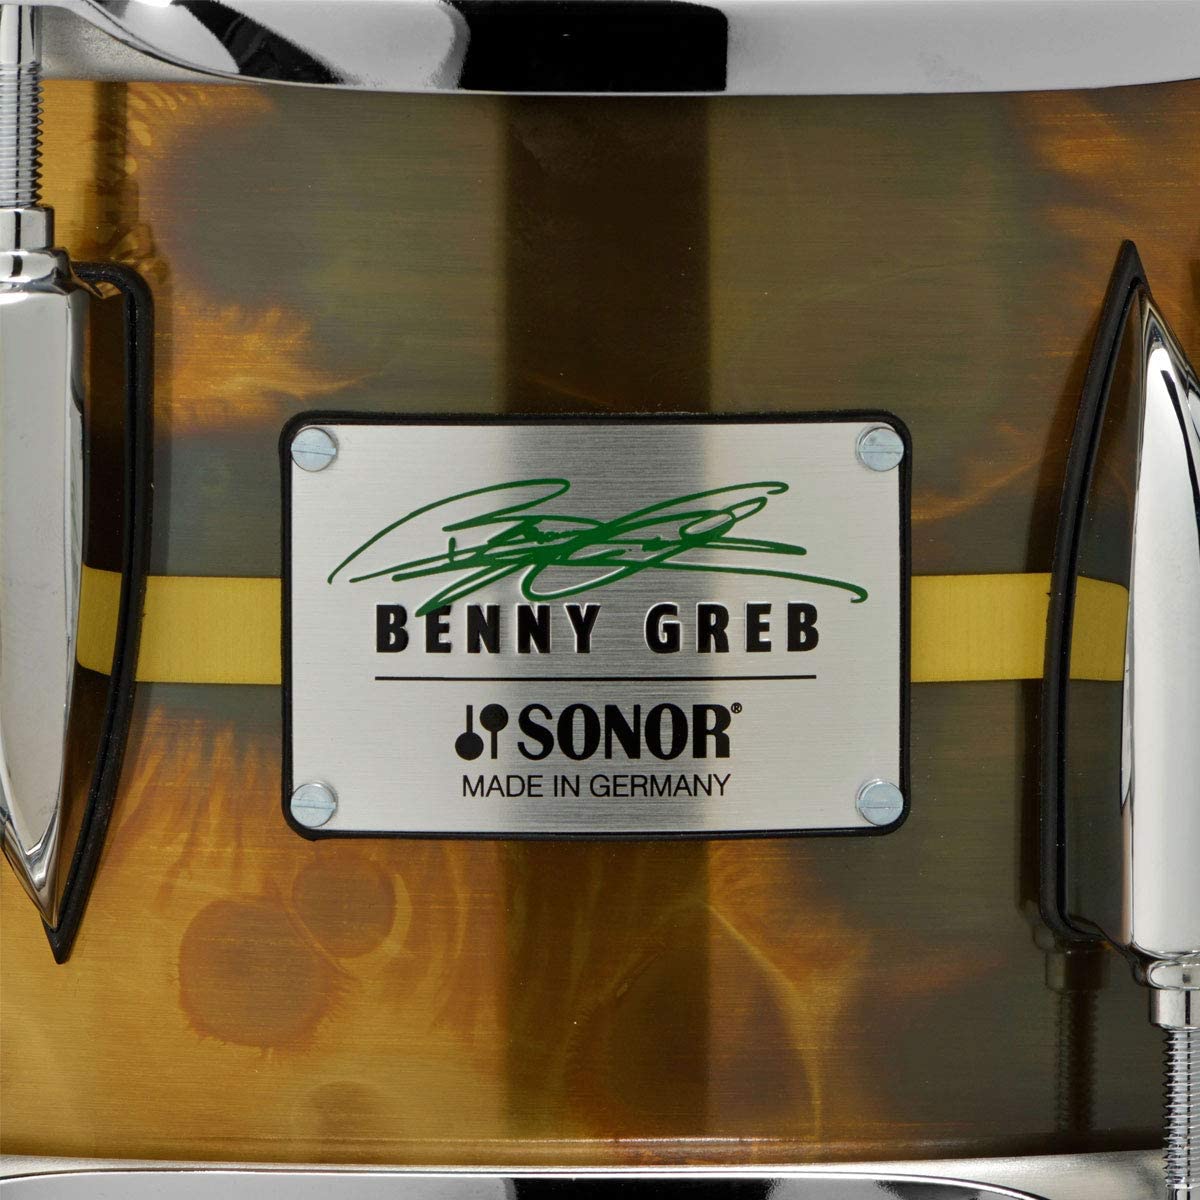 Sonor Benny Greb 2.0 13”x5.75” Snare Drum - Brass